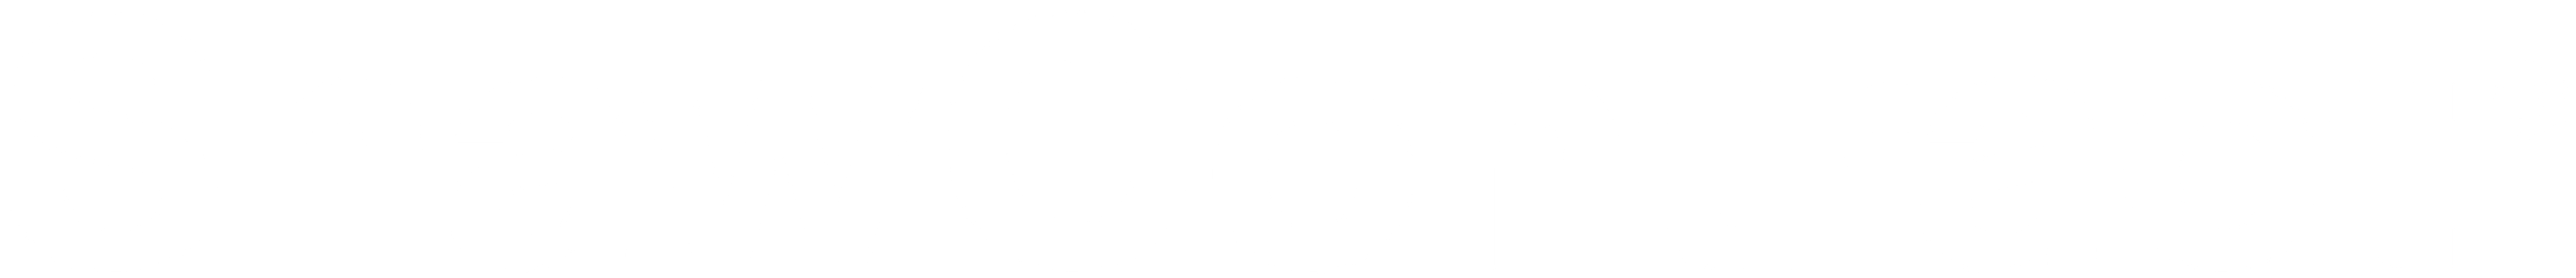 SC_new-logo_white